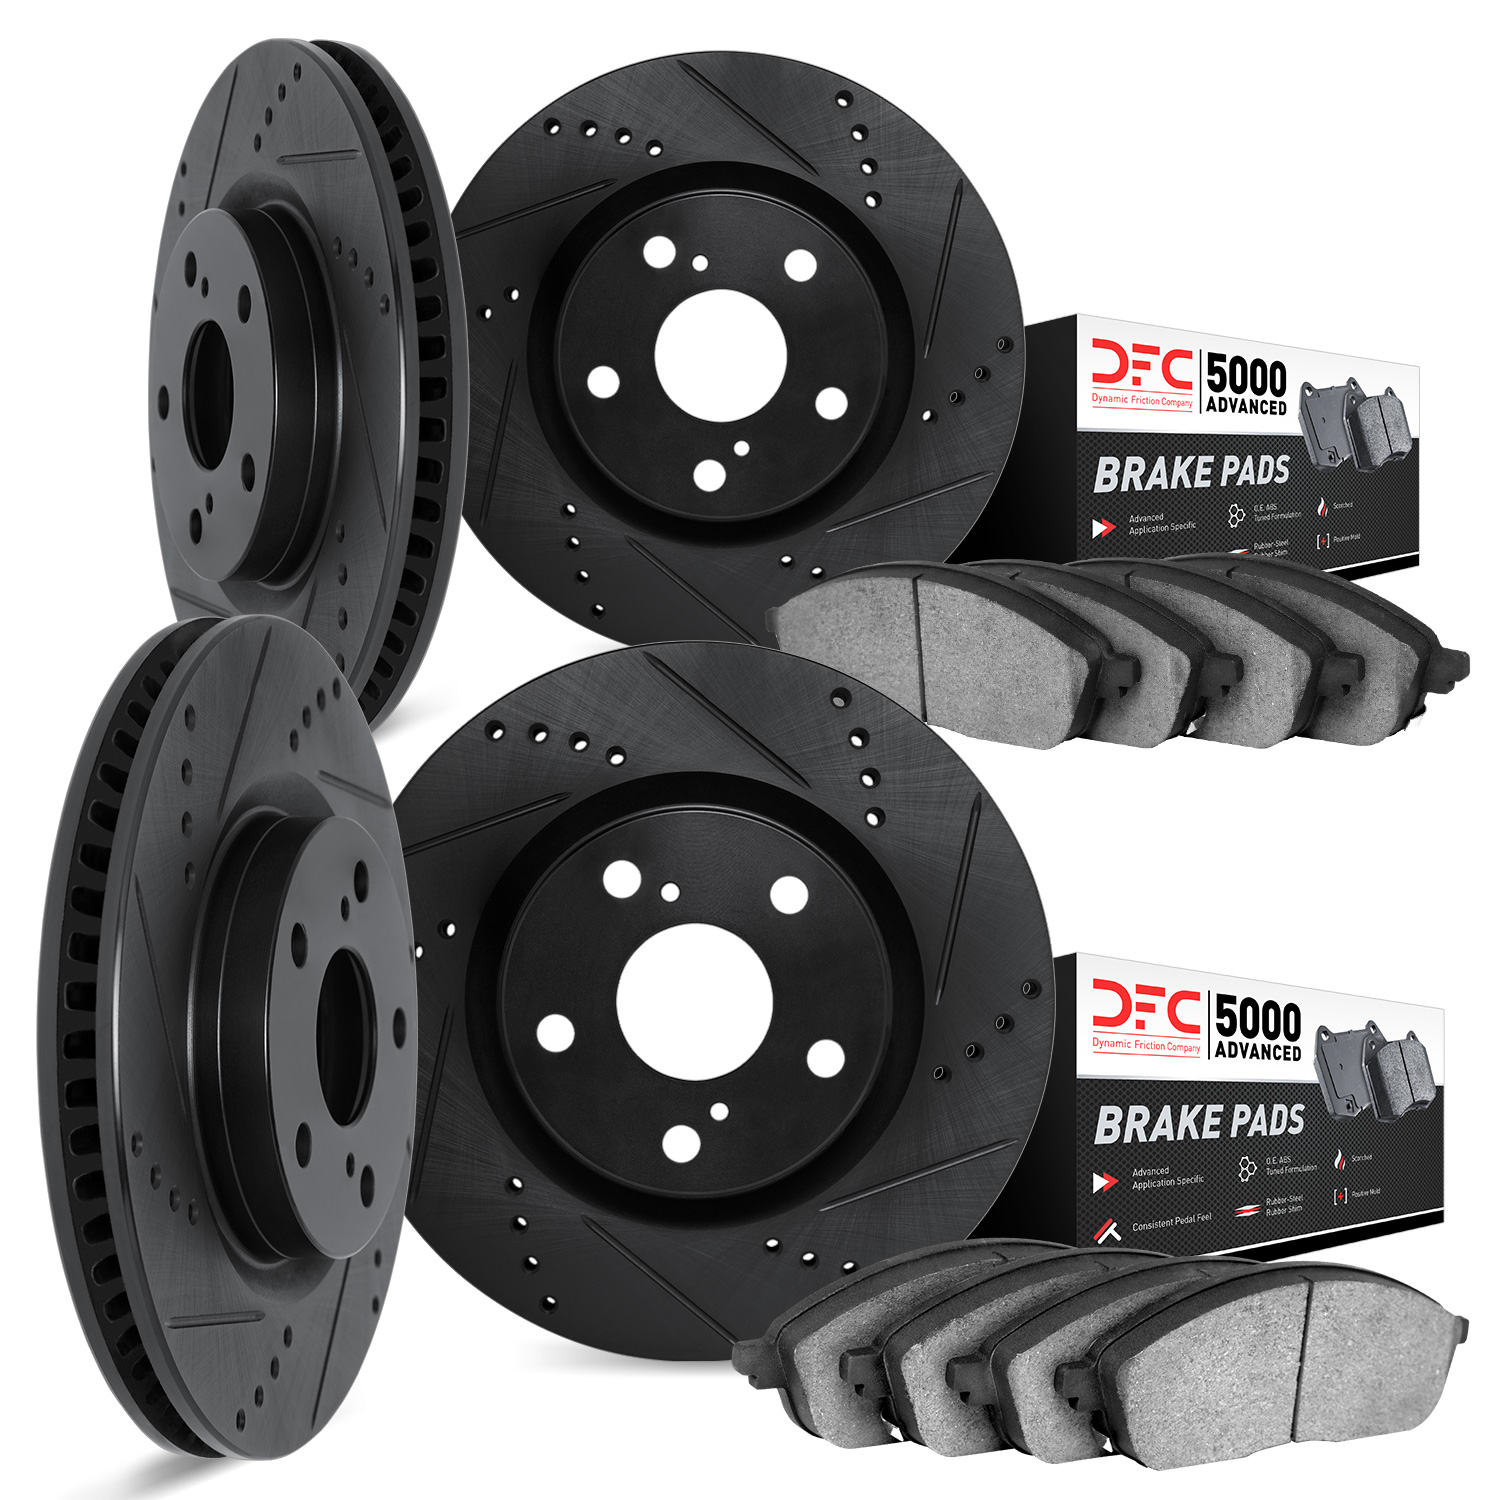 8504-54281 Drilled/Slotted Brake Rotors w/5000 Advanced Brake Pads Kit [Black], 2007-2014 Ford/Lincoln/Mercury/Mazda, Position: